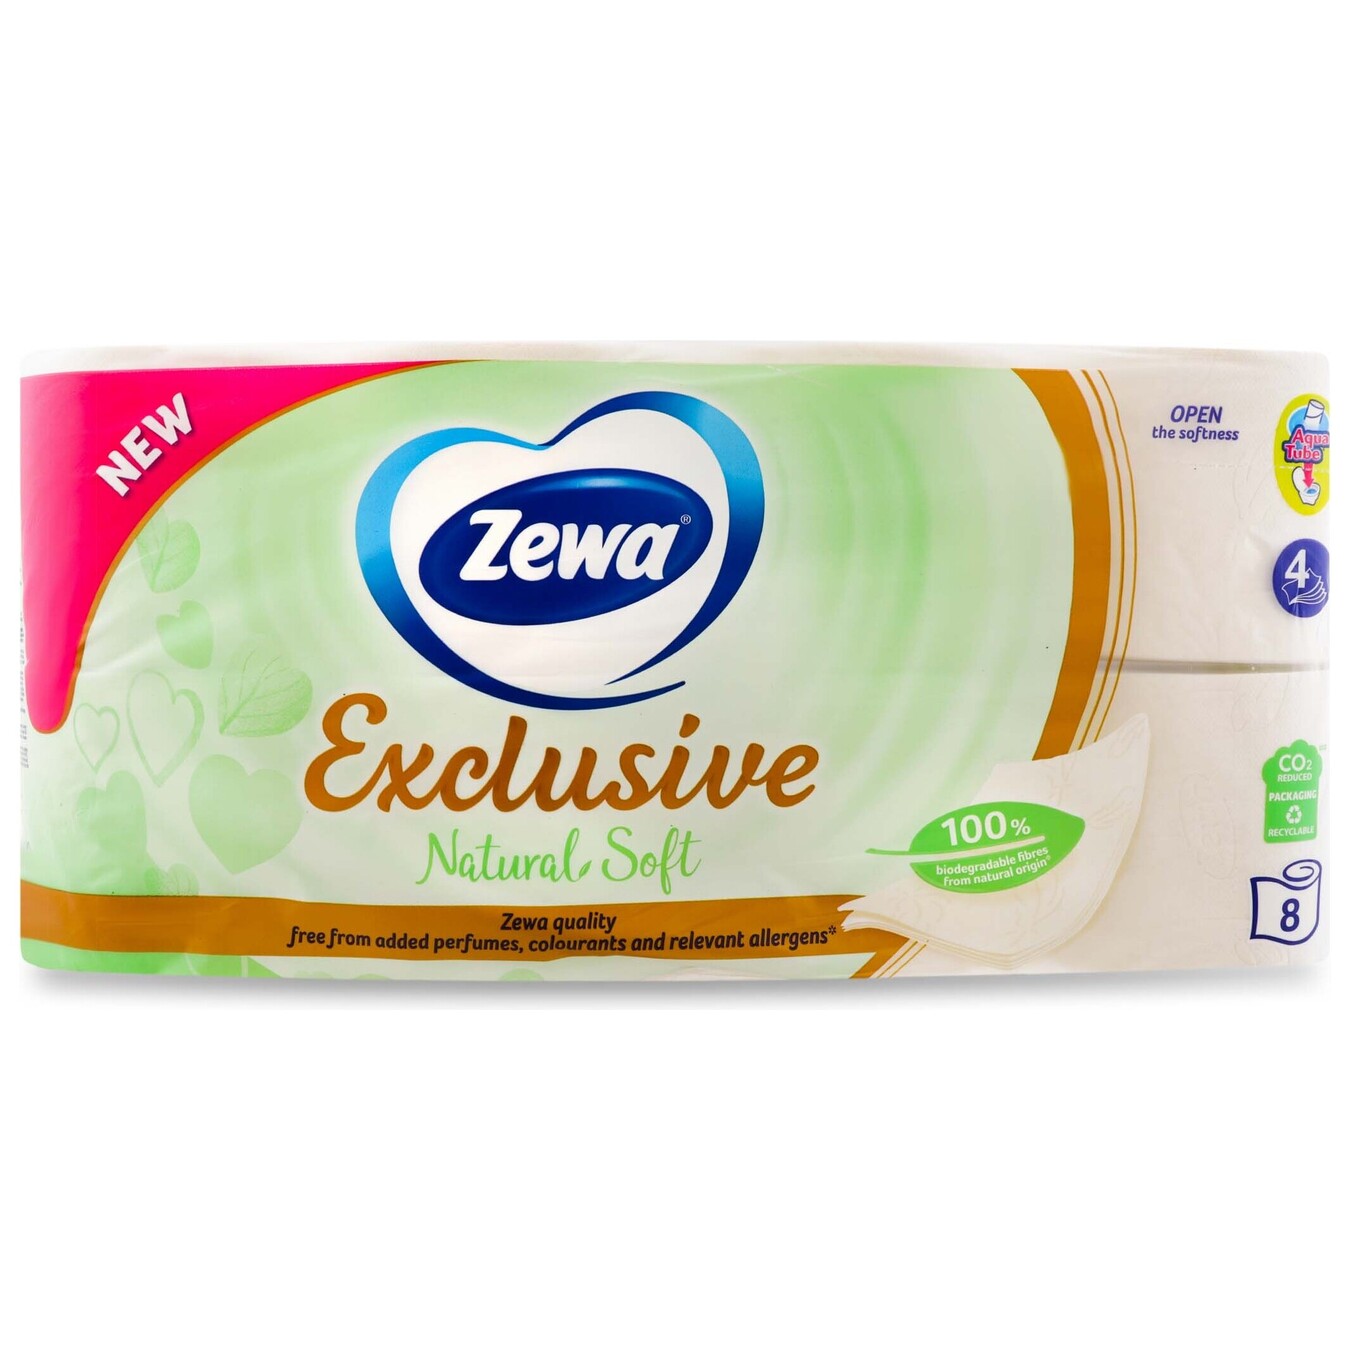 Zewa Exclusive Natural Toilet paper 8 pcs